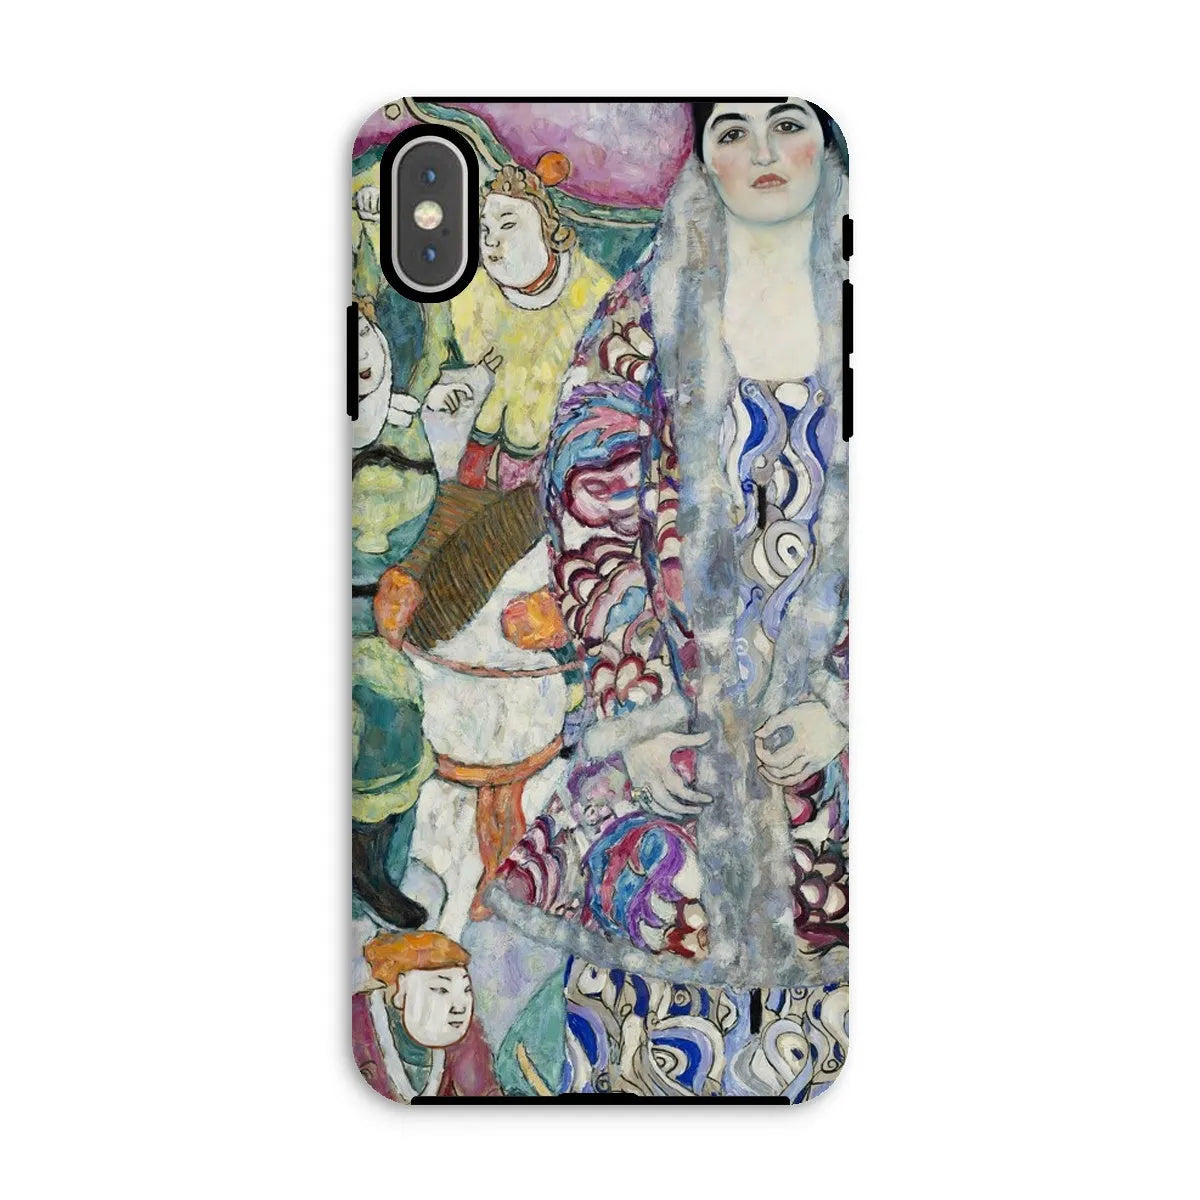 Friederike Maria Beer - Viennese Art Phone Case - Gustav Klimt - Iphone Xs Max / Matte - Mobile Phone Cases - Aesthetic